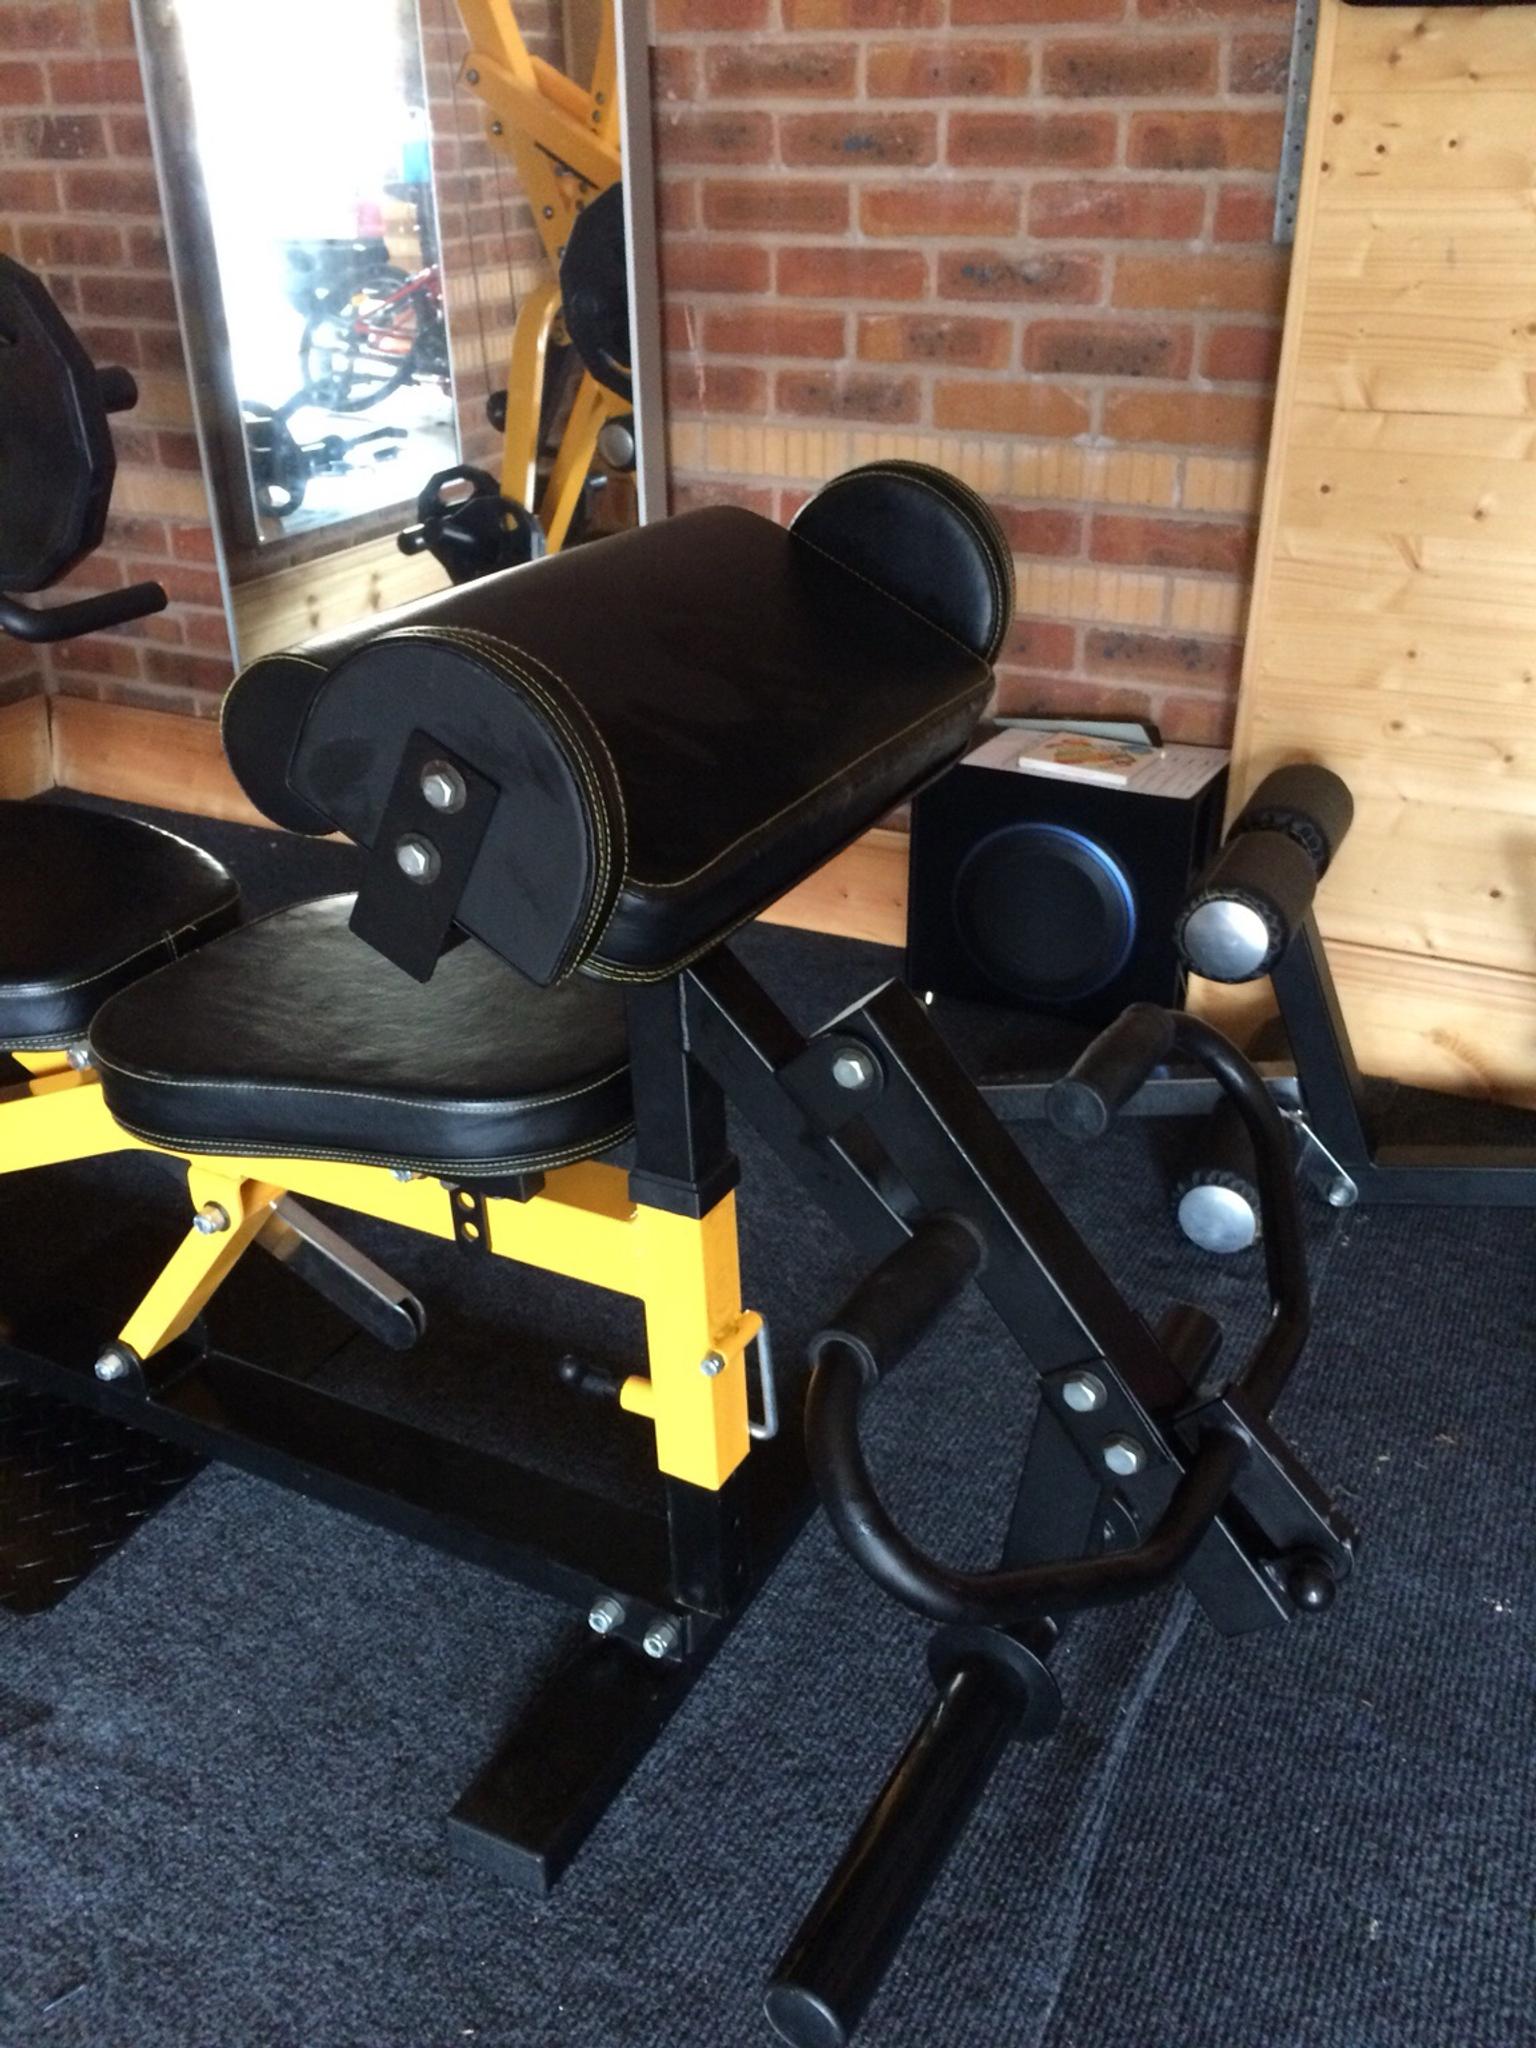 Powertec Workbench Leverage Gym in WA5 Sankey for £425.00 for sale | Shpock